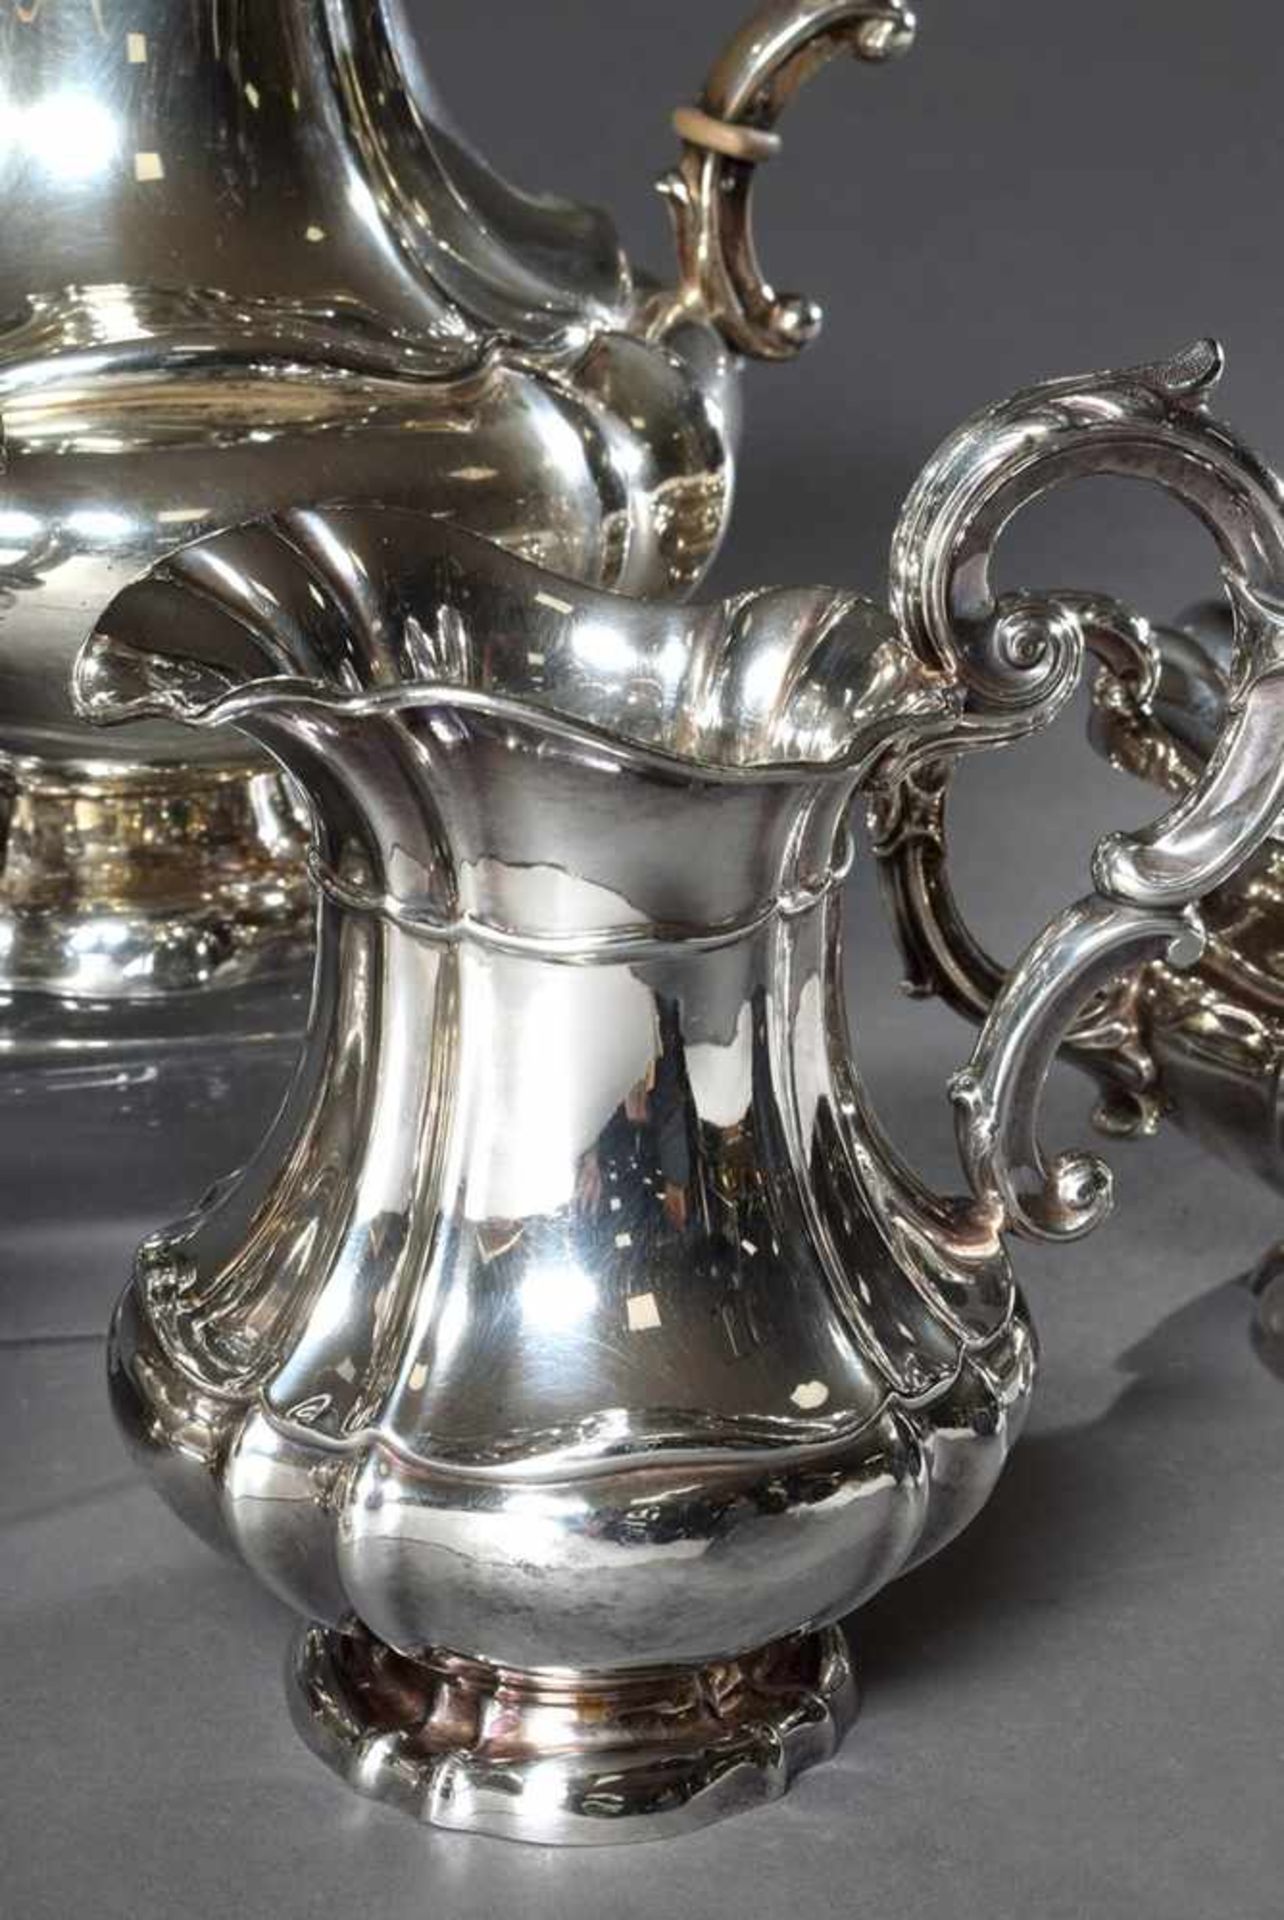 4 Teile Kaffee-Tee-Set in Spätbiedermeier Façon, Posen/Bruckmann & Söhne, Silber 835, 1864g, H. 11- - Image 5 of 7